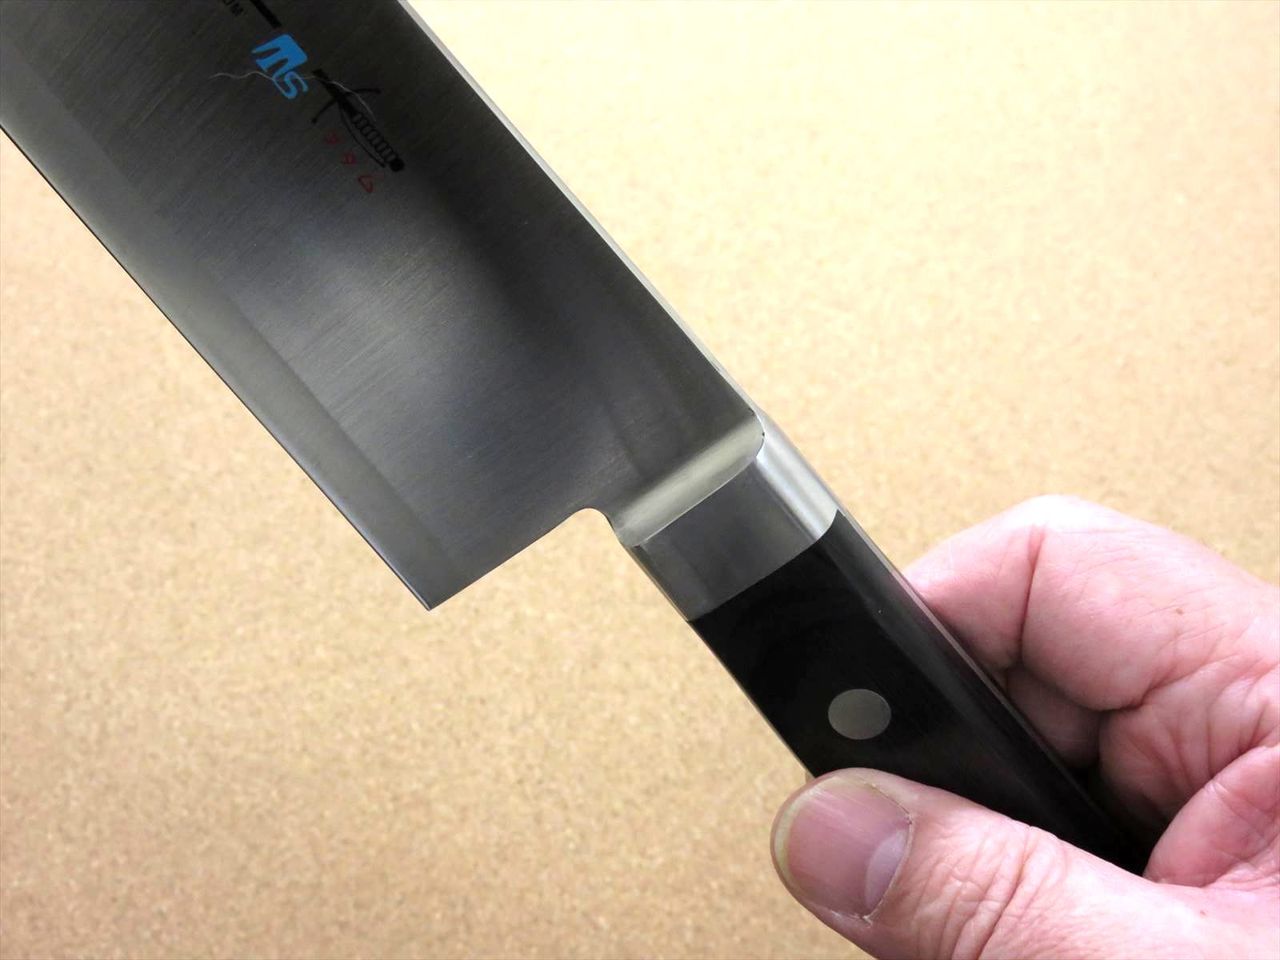 Japanese Kitchen Gyuto Chef's Knife 300mm 11.8 inch Meat Fish cutting SEKI JAPAN